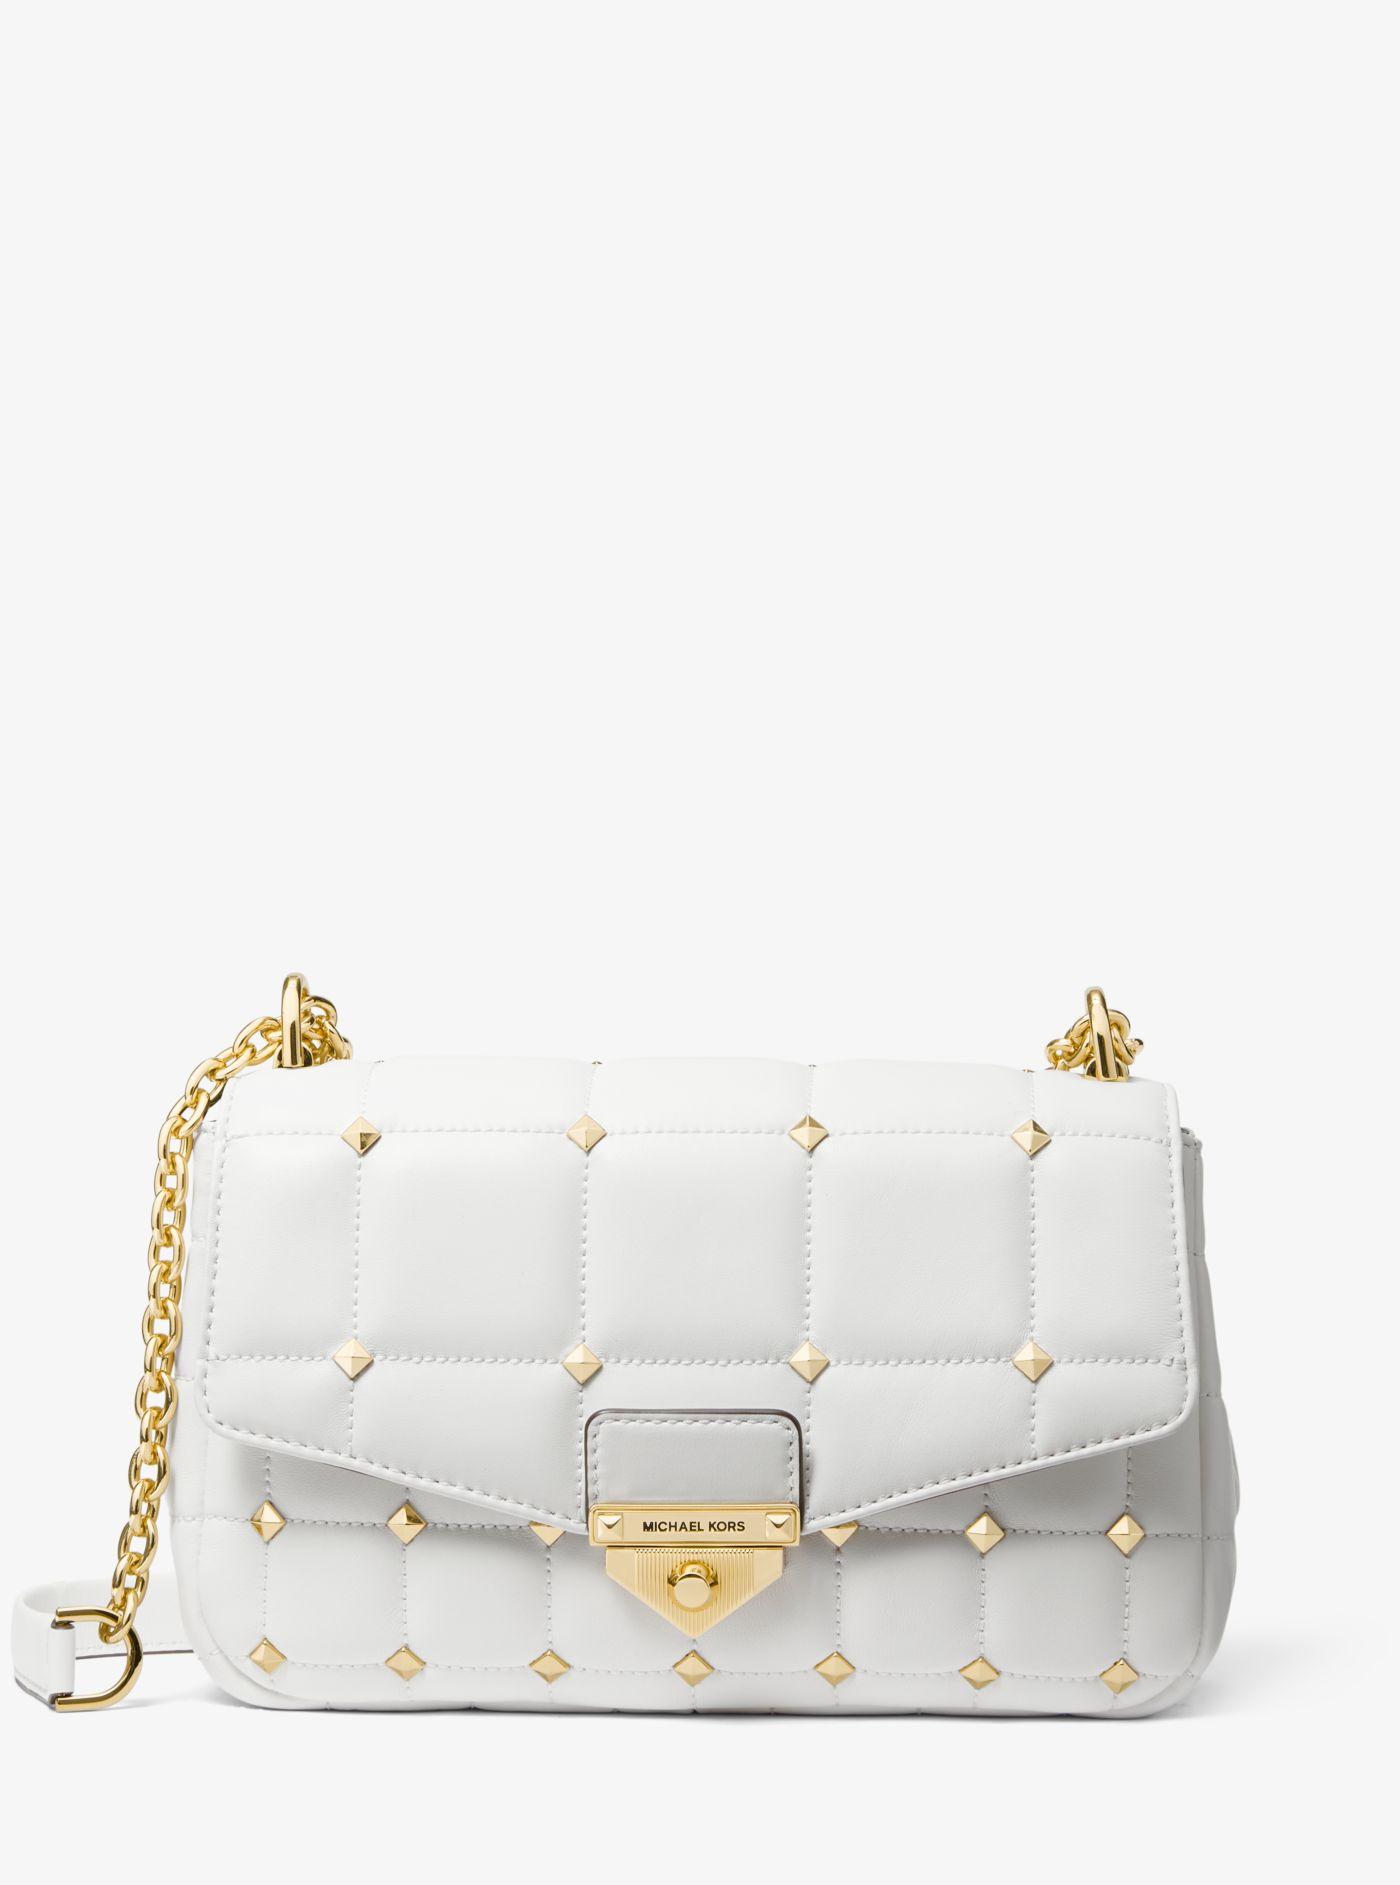 michael kors white studded purse